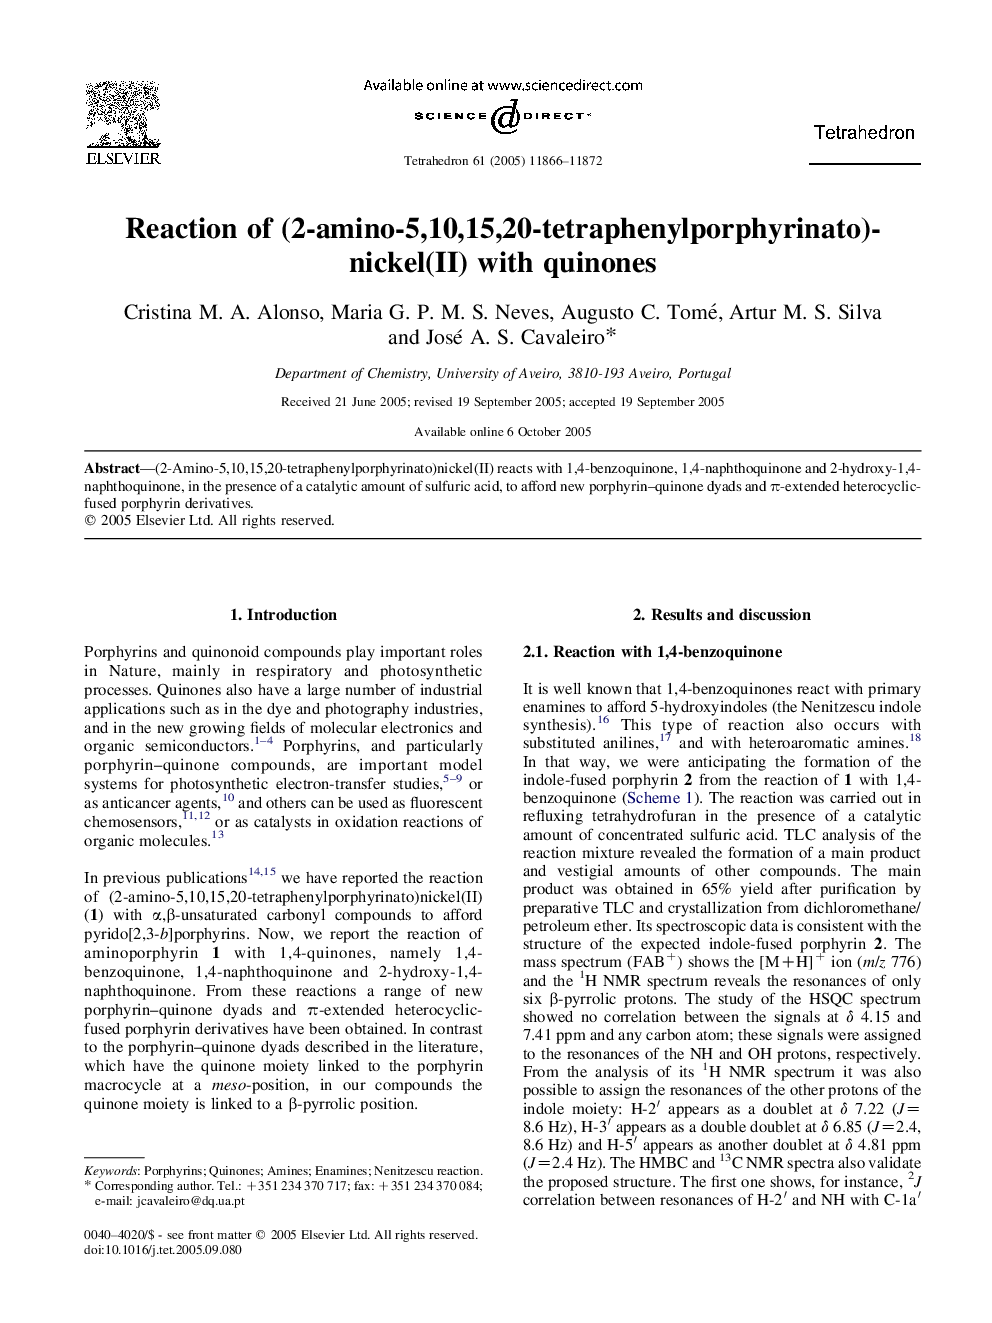 Reaction of (2-amino-5,10,15,20-tetraphenylporphyrinato)nickel(II) with quinones